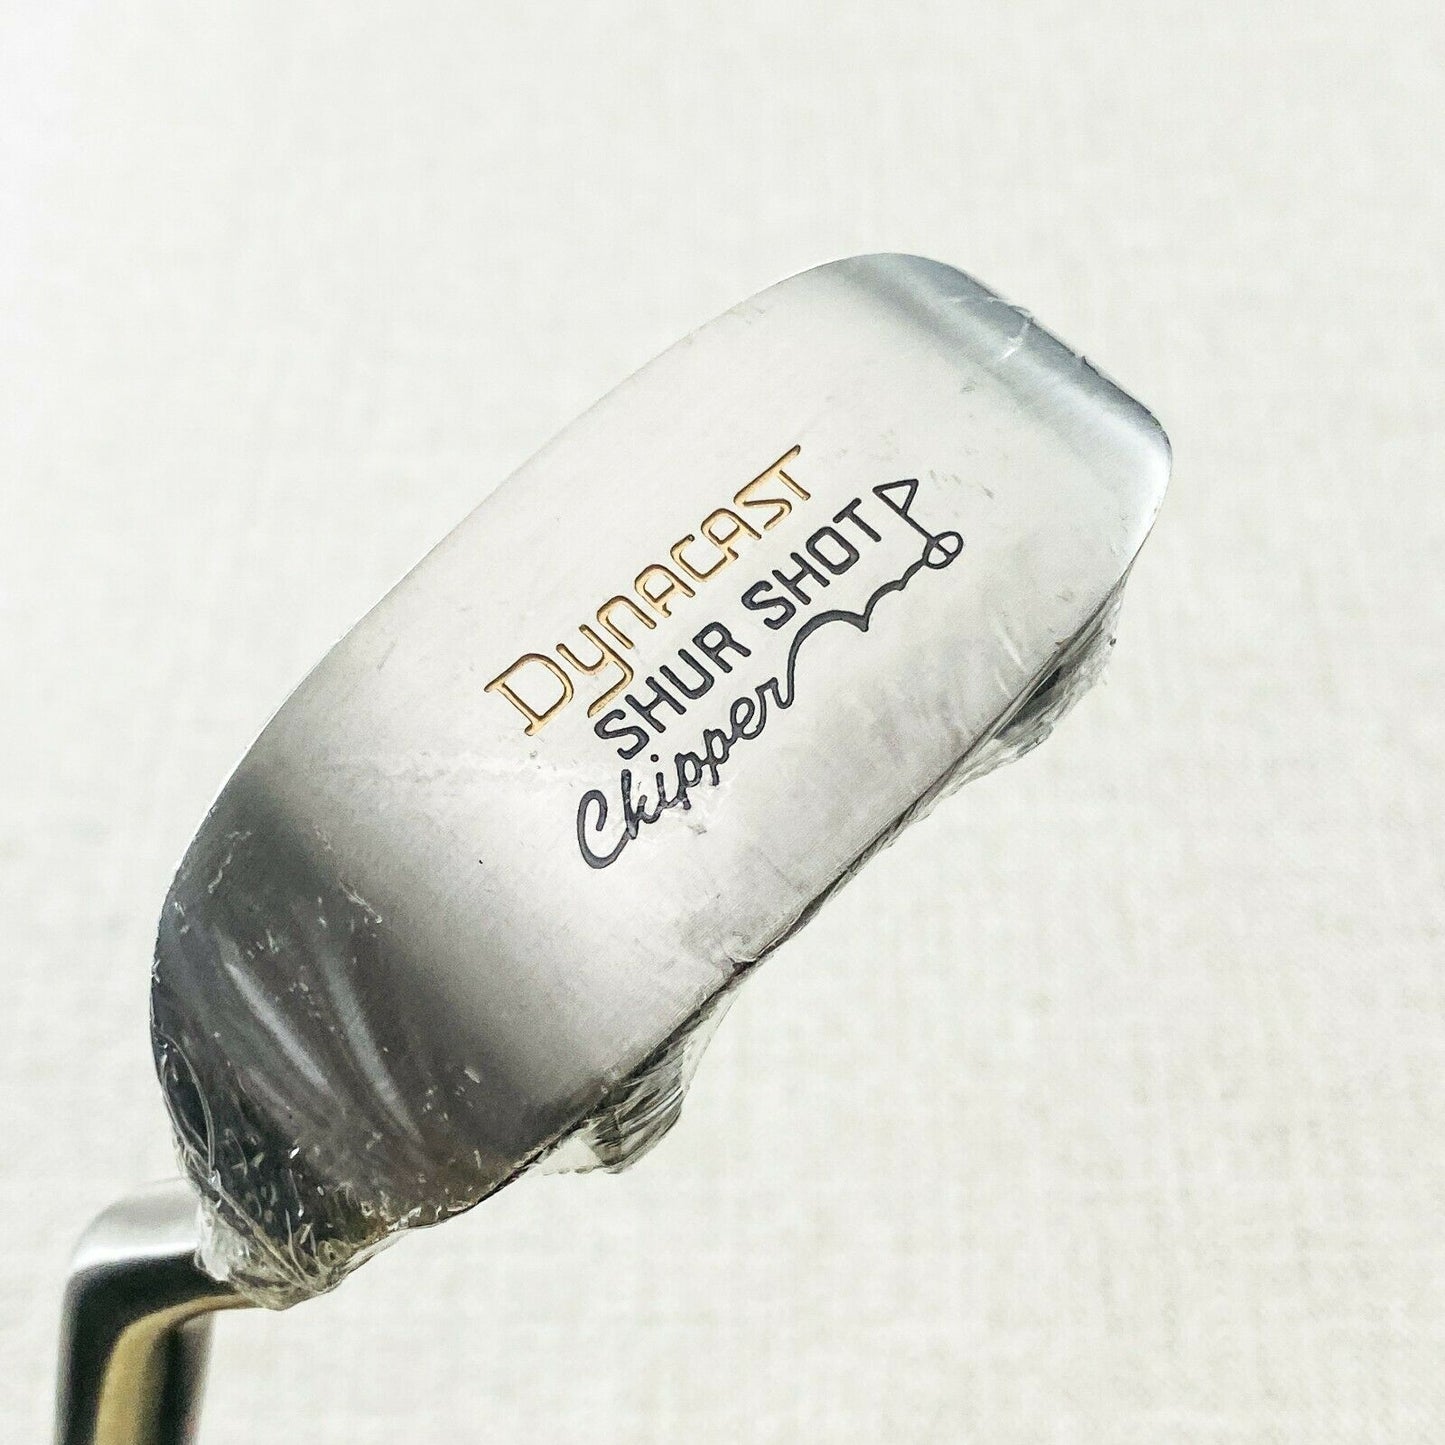 Dynacast Shur-Shot LEFT-HAND Chipper. 35 inch - Brand New